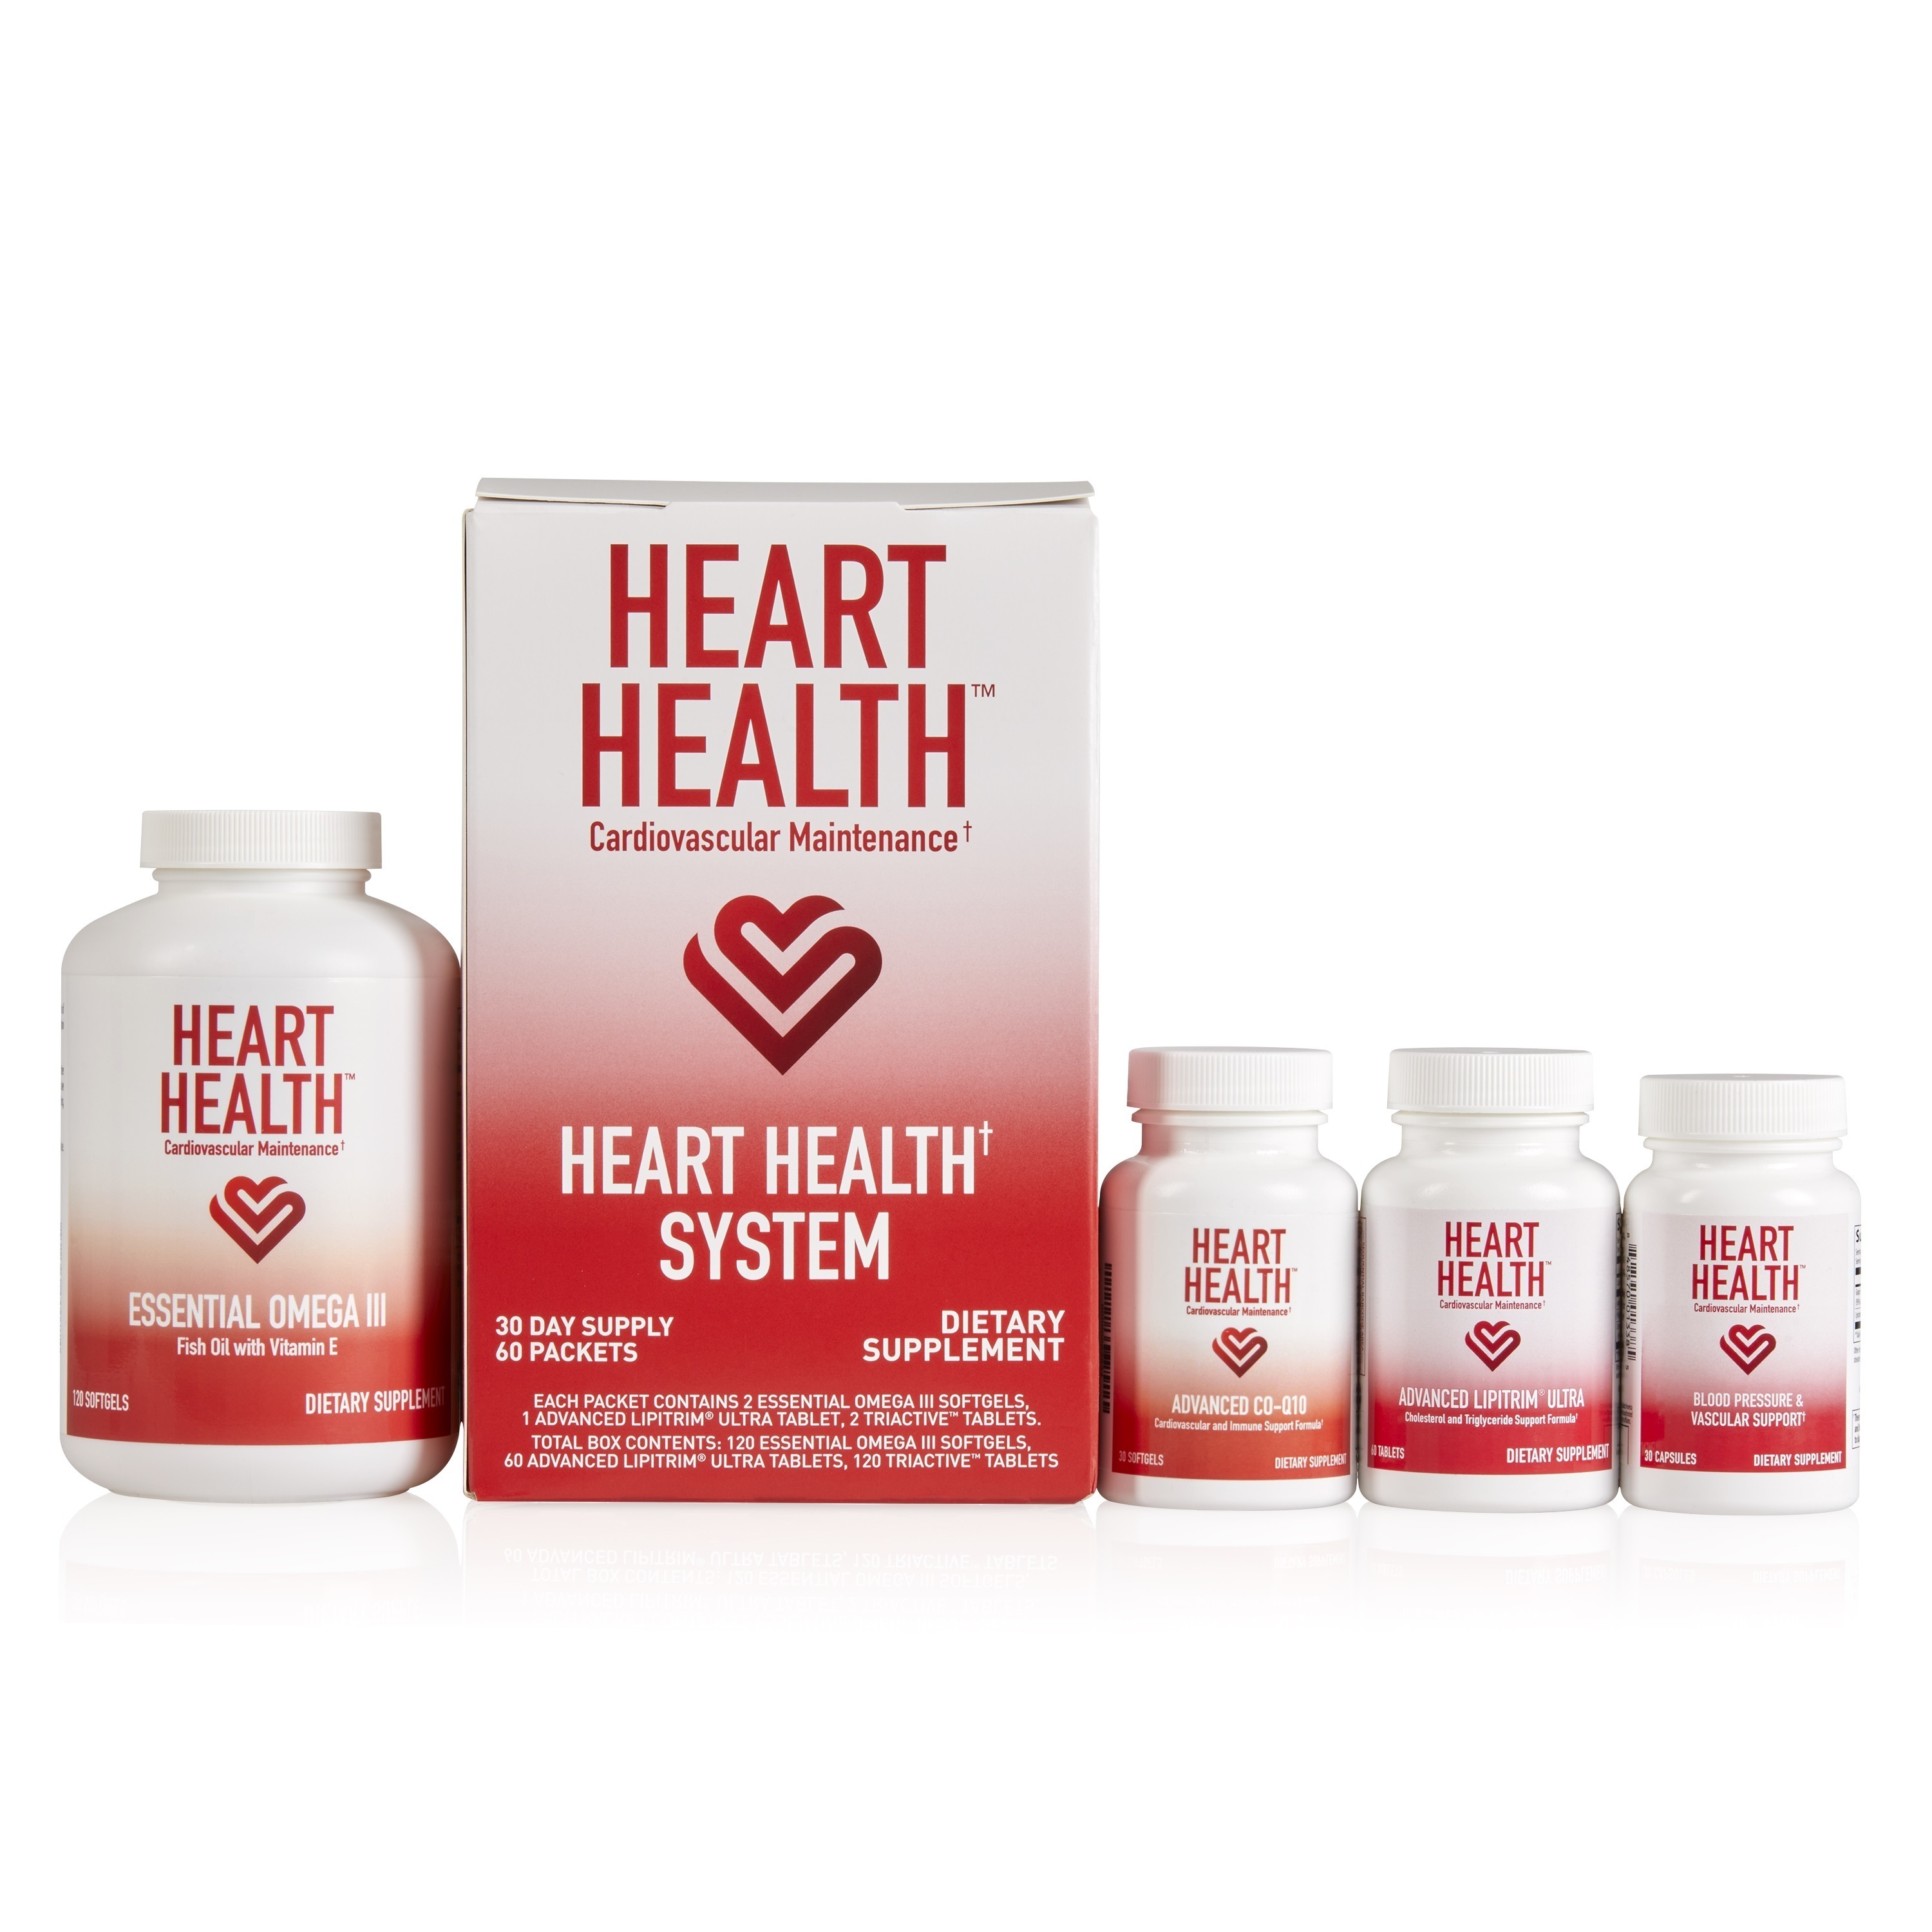 Heart Health™ System